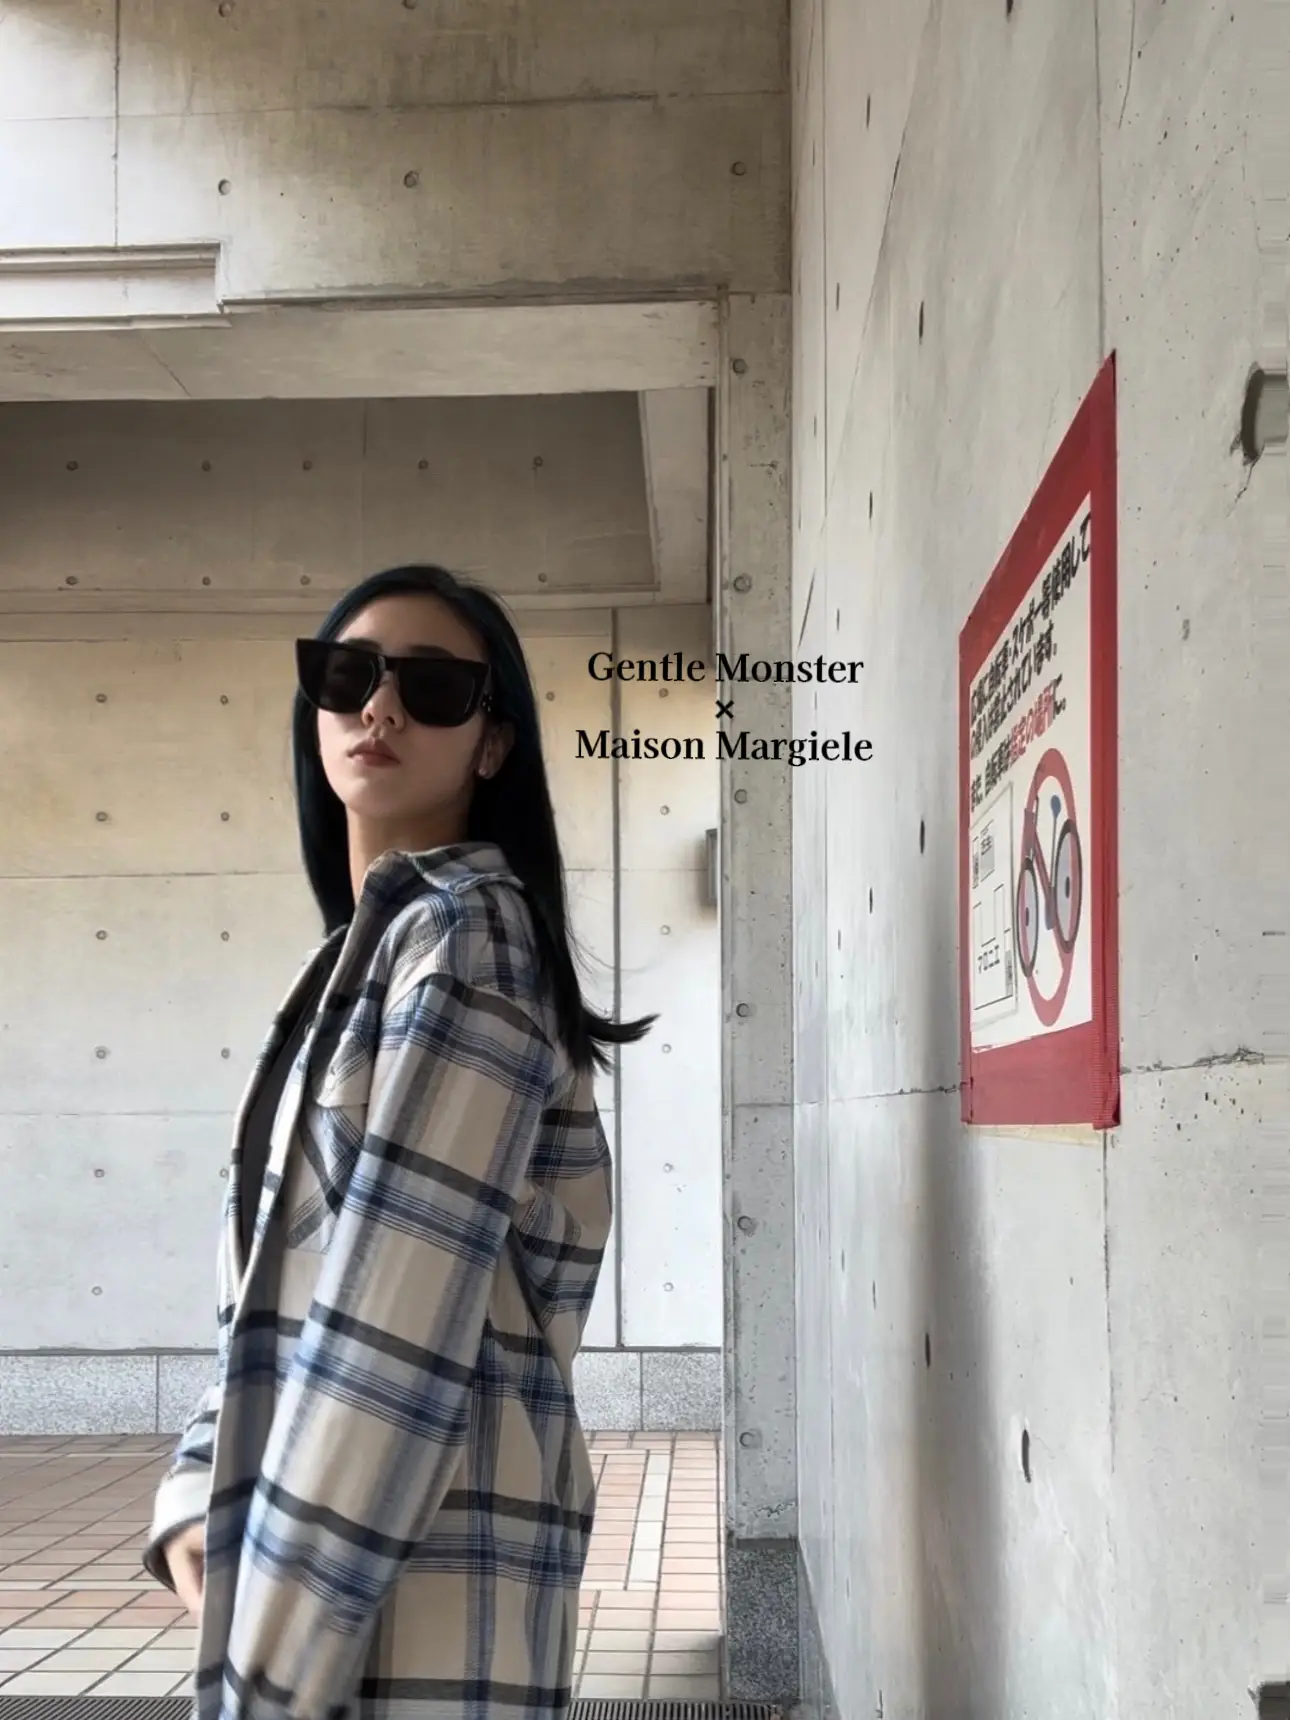 Gentle monster ✖ ︎ Maison Margiela Sunglasses 🕶 ♡ | Gallery